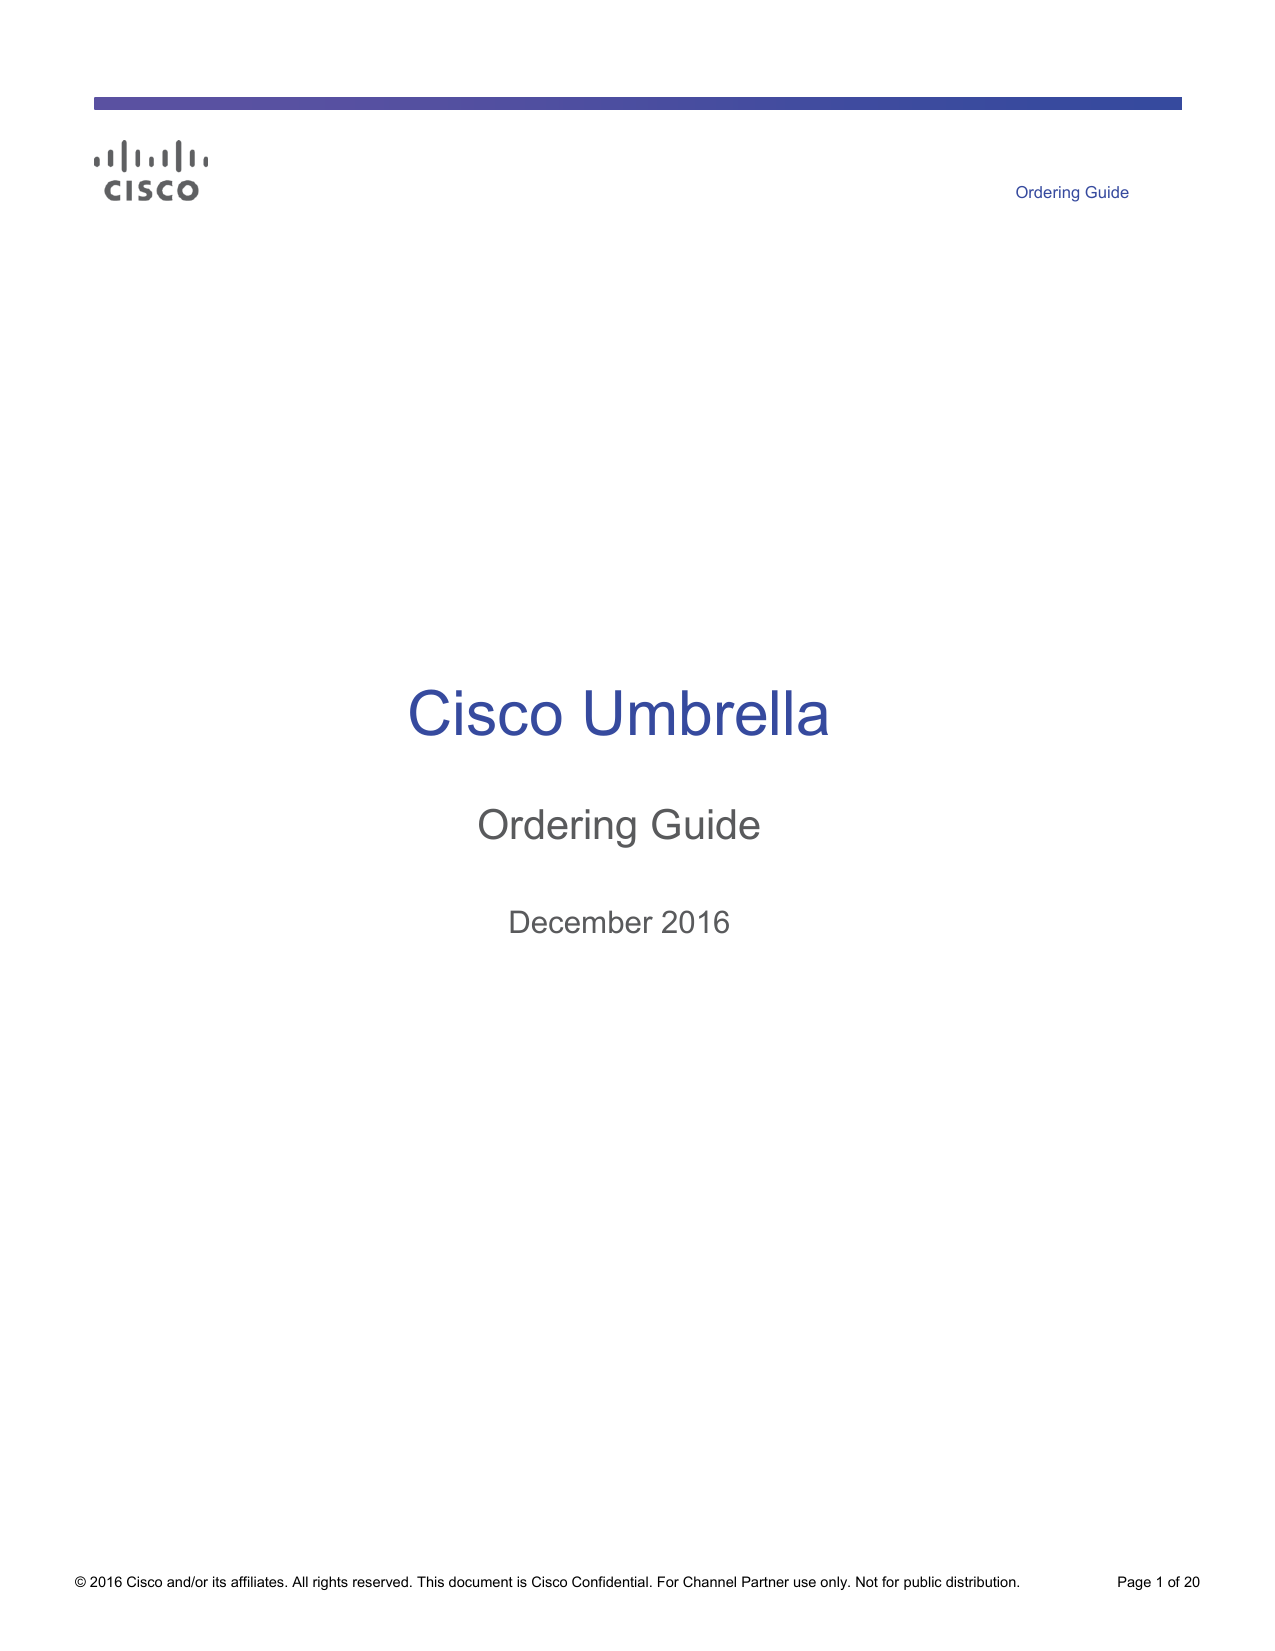 cisco umbrella ad integration guide